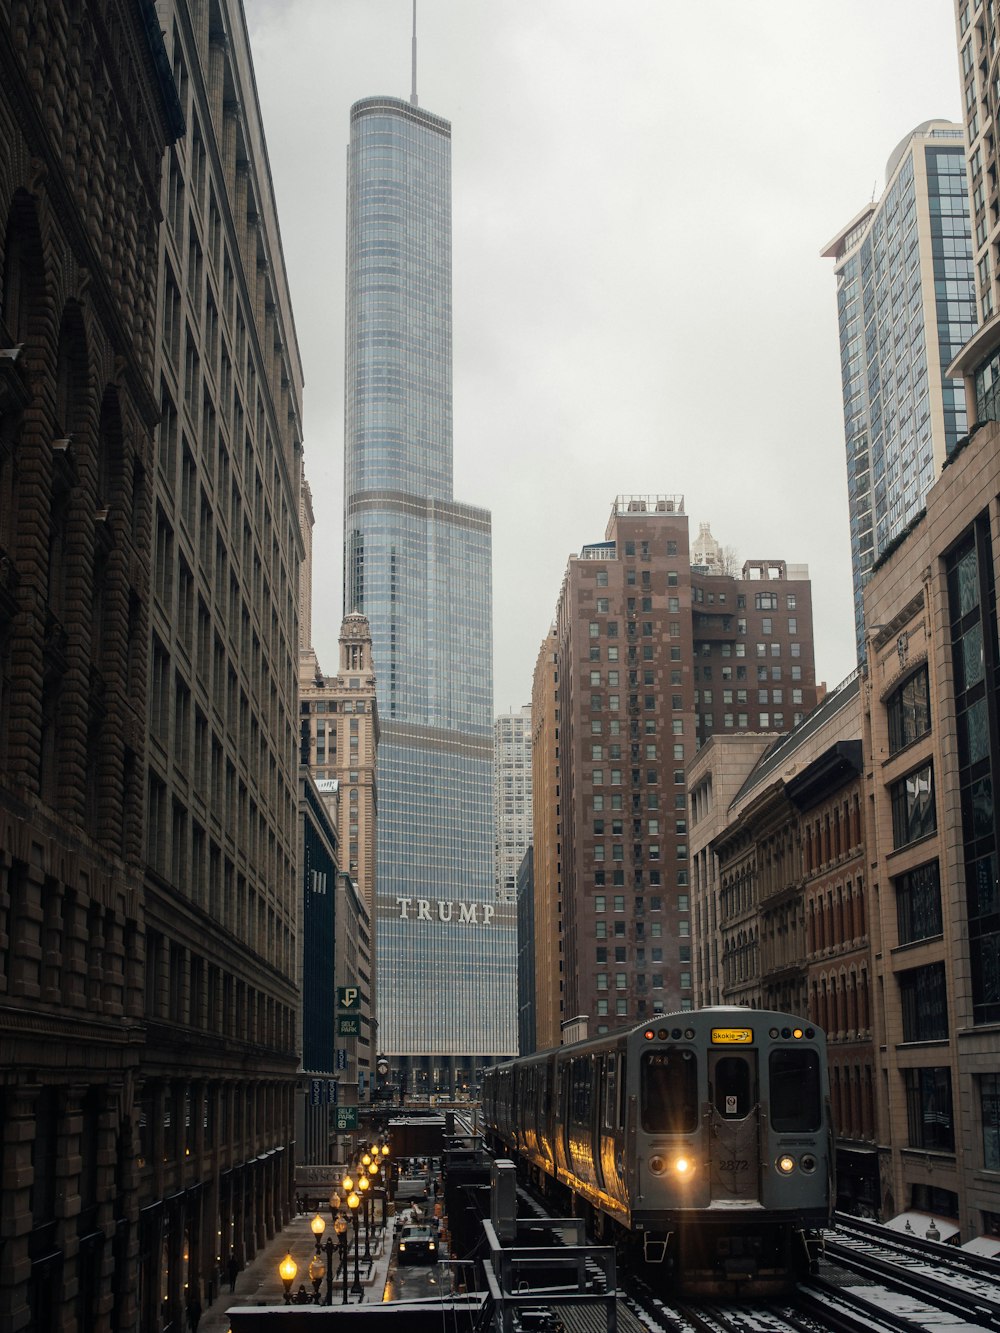 powered-on city lights photo – Free Chicago Image on Unsplash